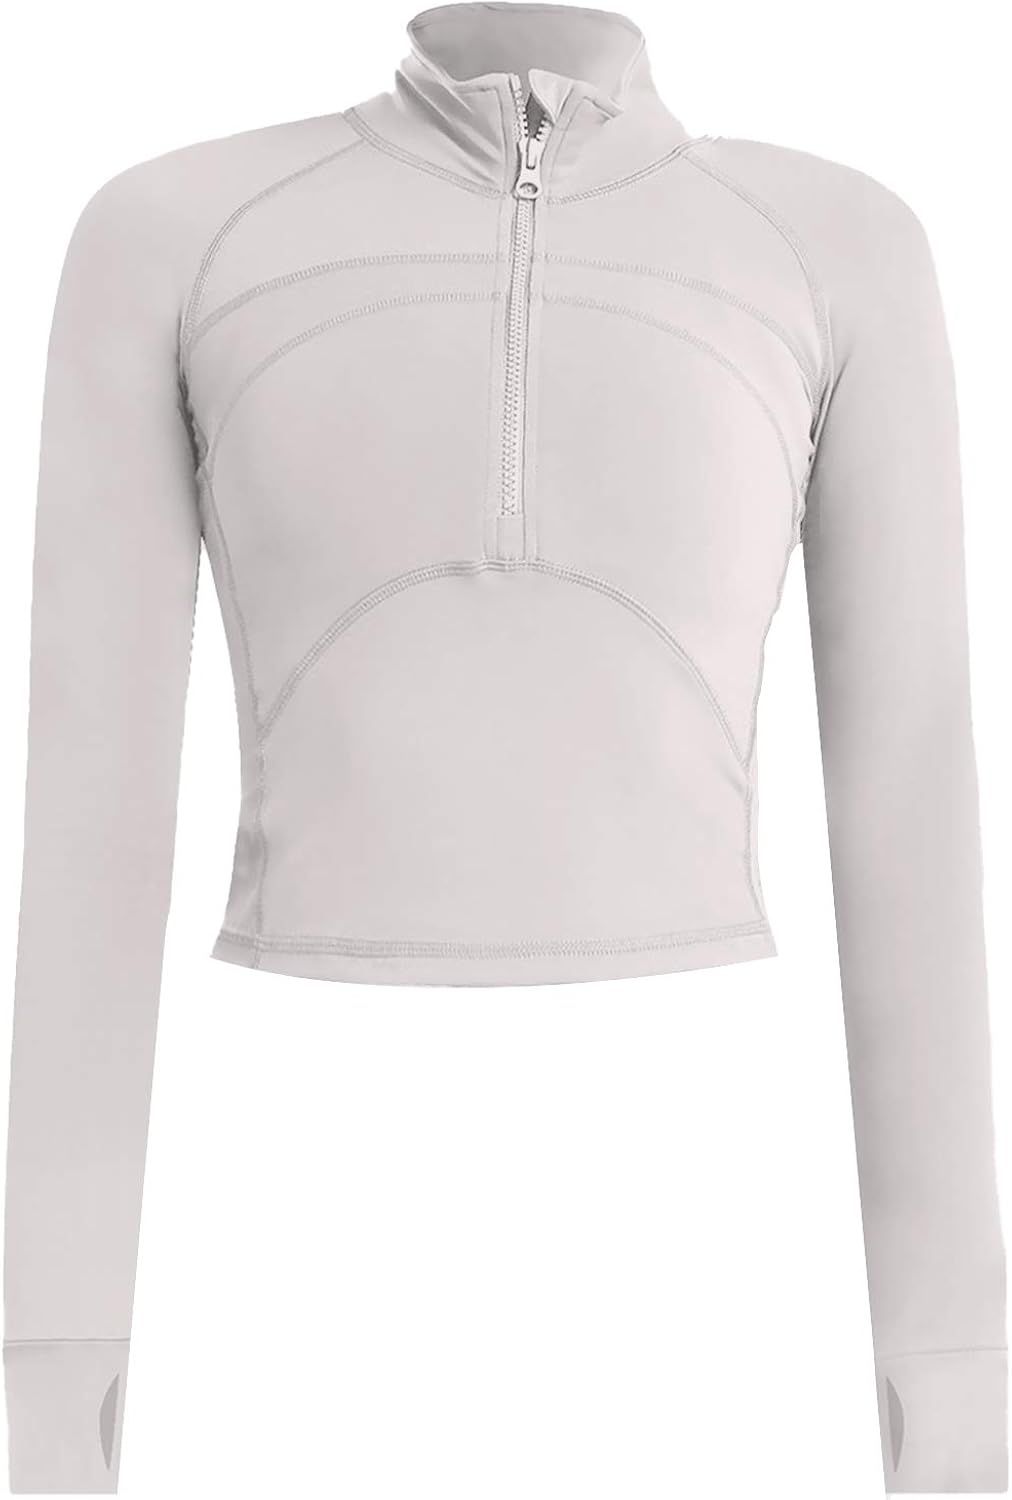 Vsaiddt Women's Athletic Half Quarter Zip Pullover Sweatshirt Quick Dry Workout Jackets Yoga Running | Amazon (US)